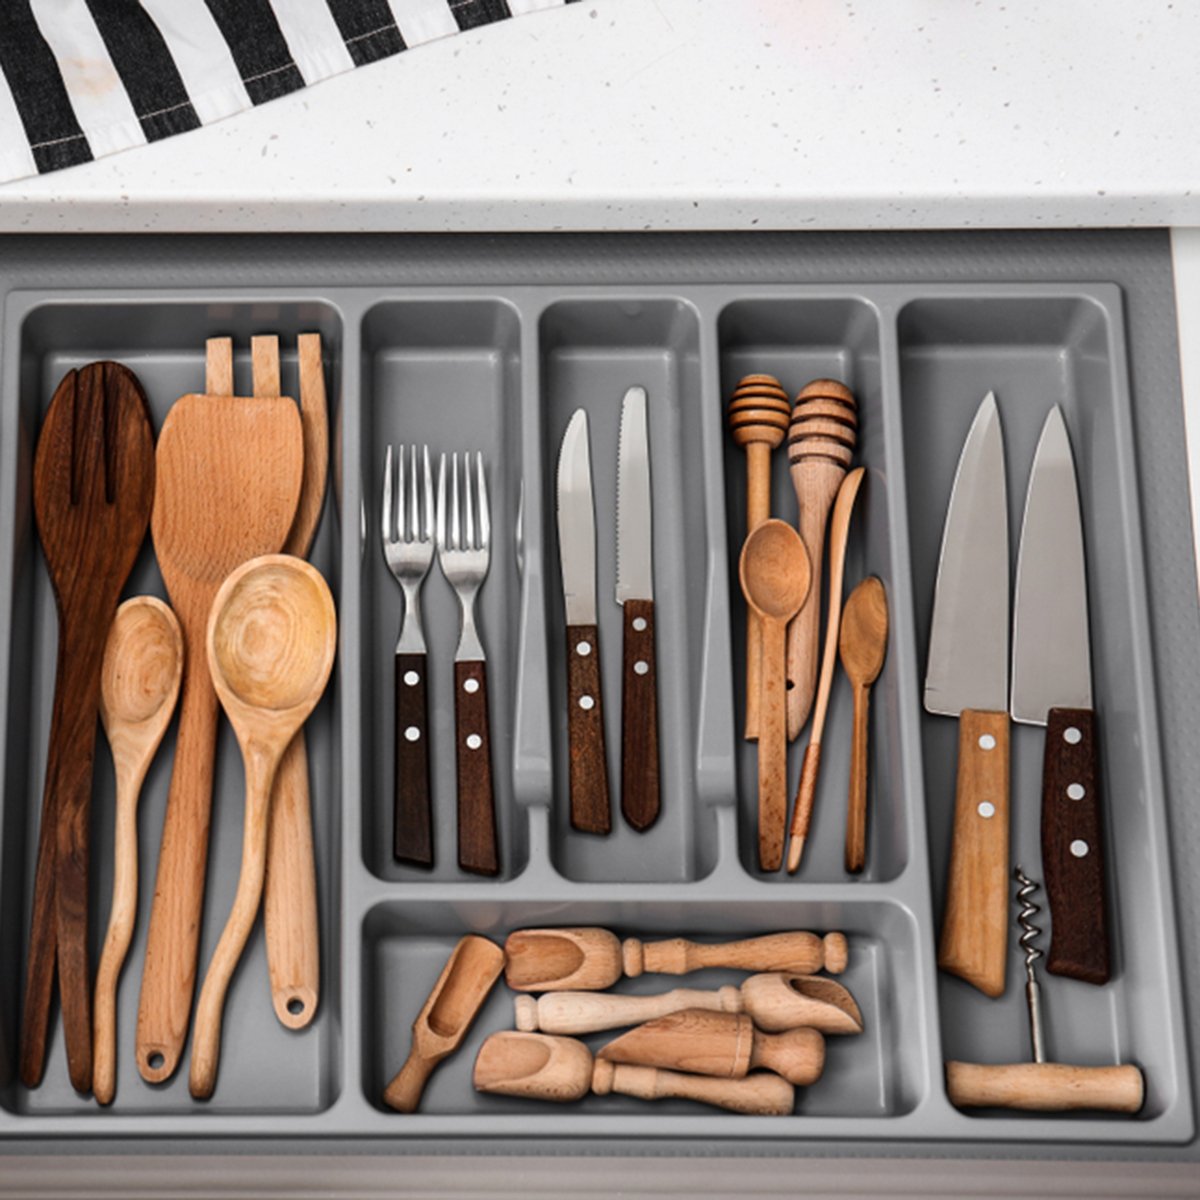 3- Take advantage of cutlery organizers